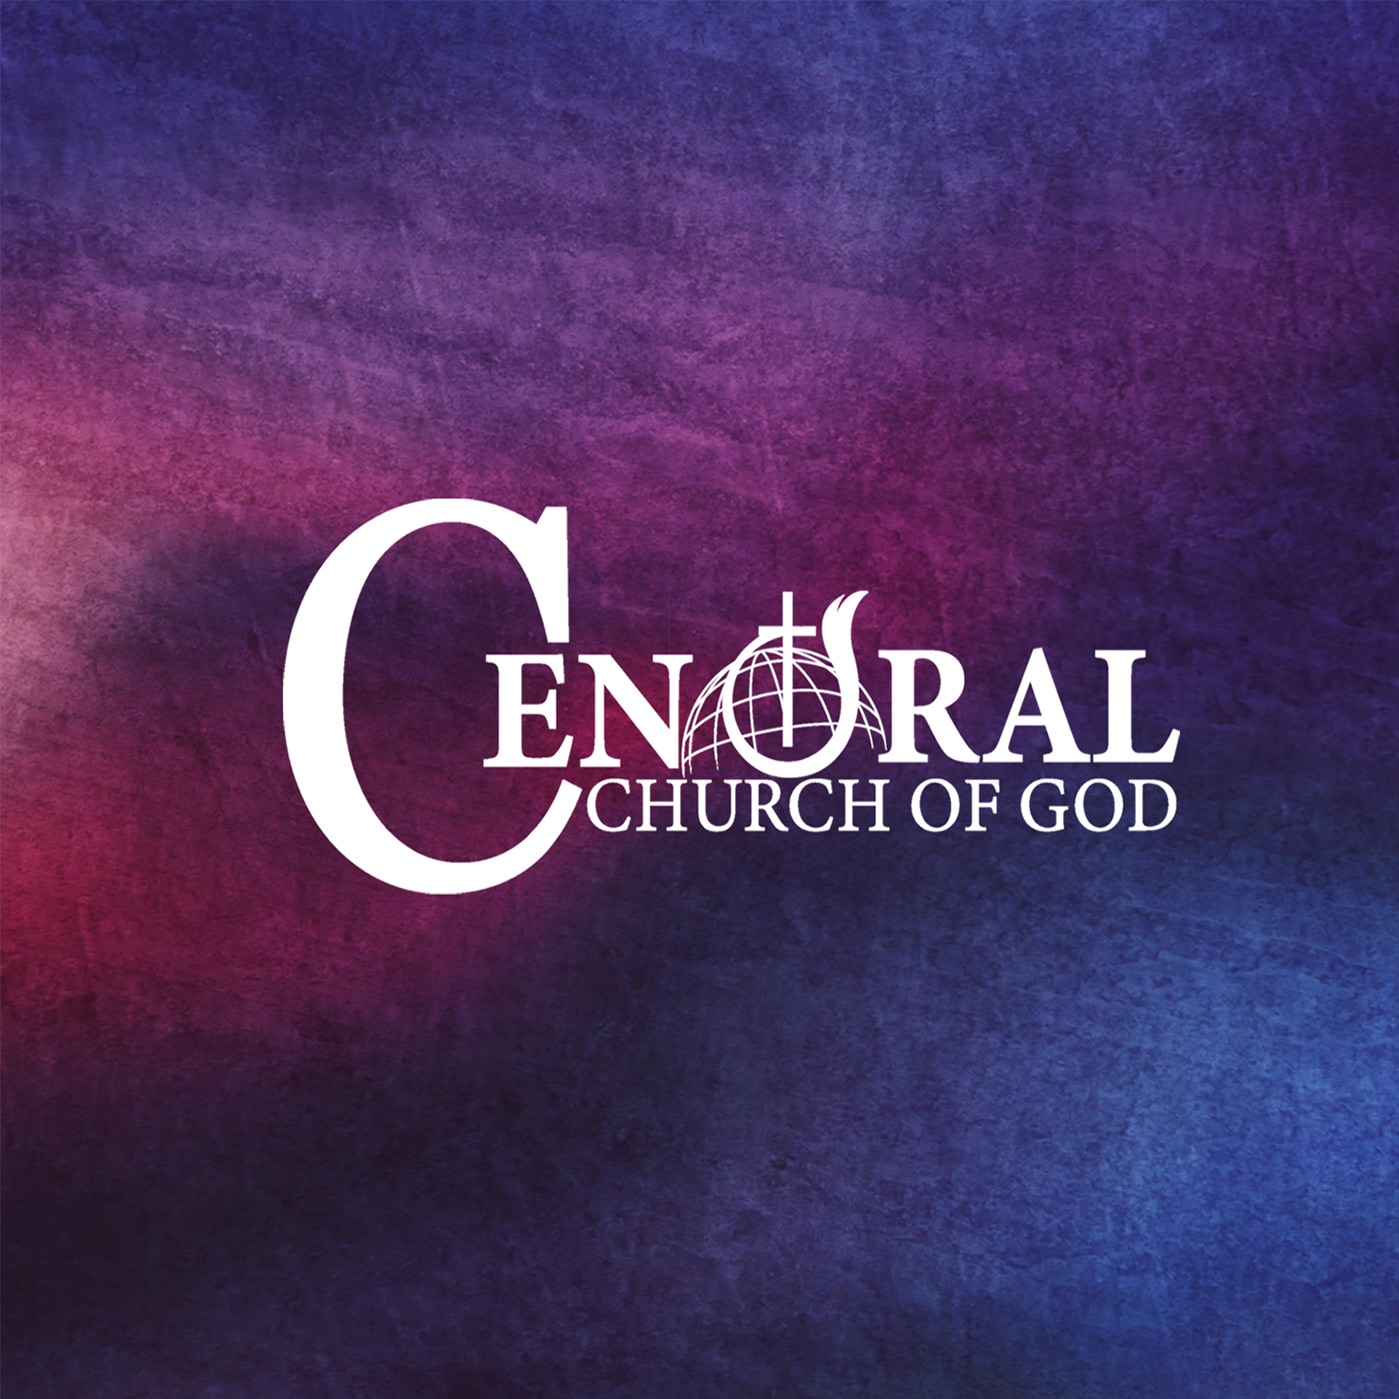 Central Church of God - Portage